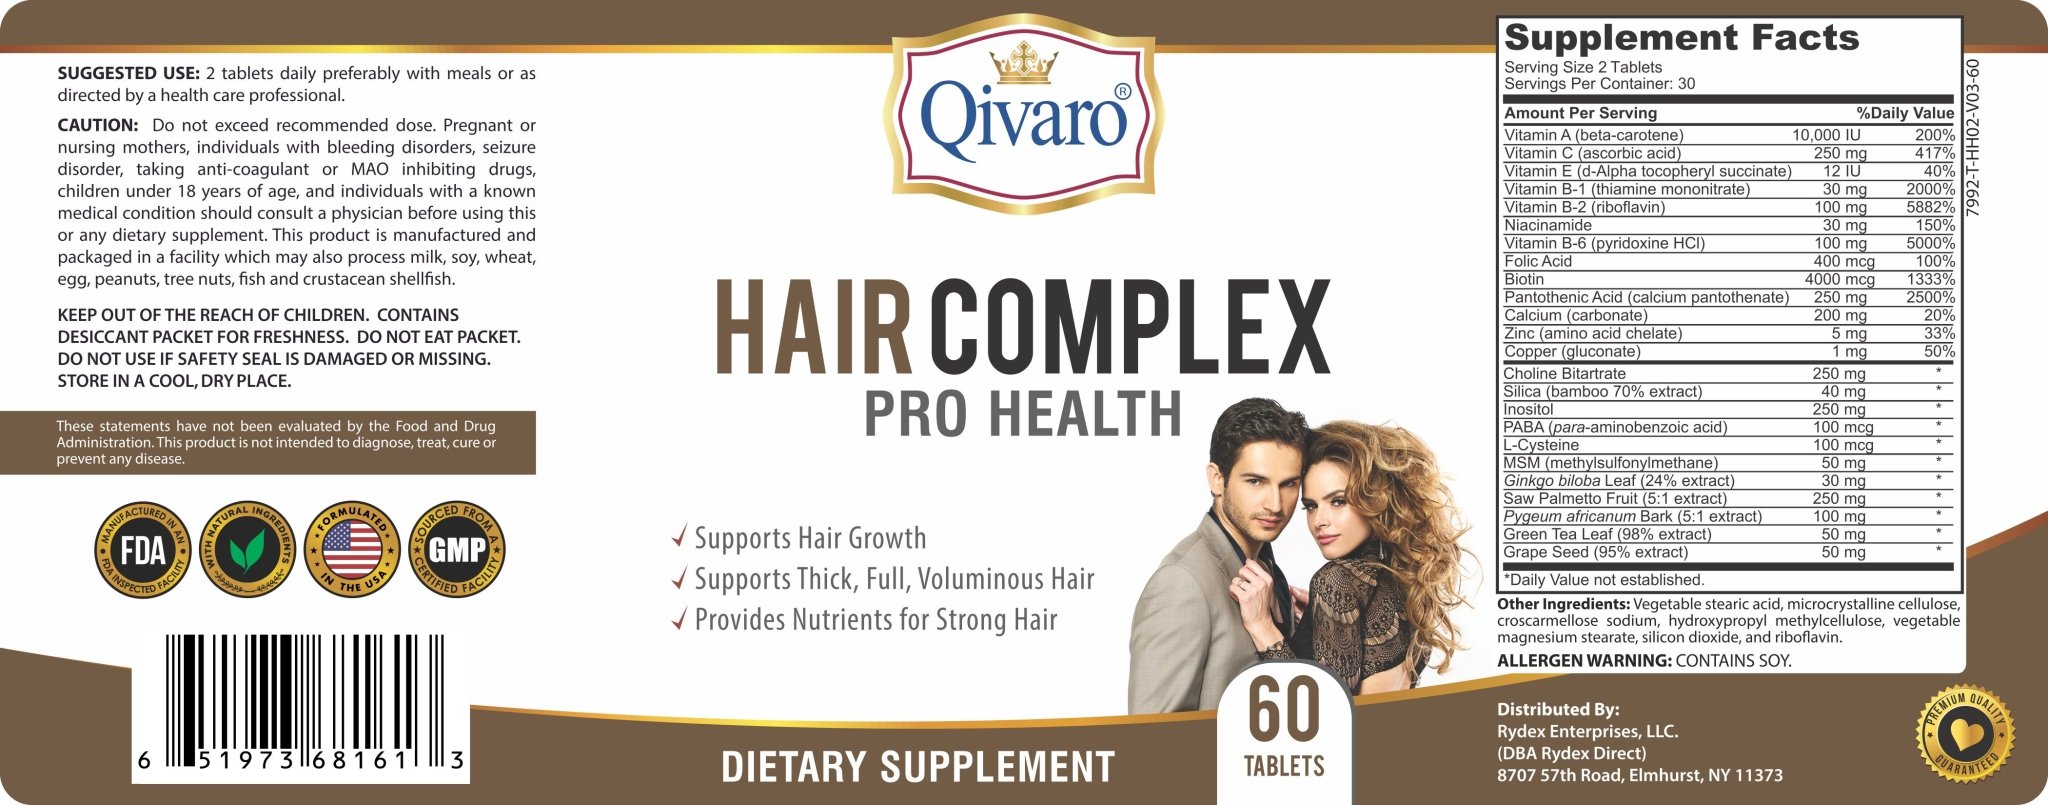 Hair Complex Pro Health By Qivaro (60 coated tablets) - Qivaro USA